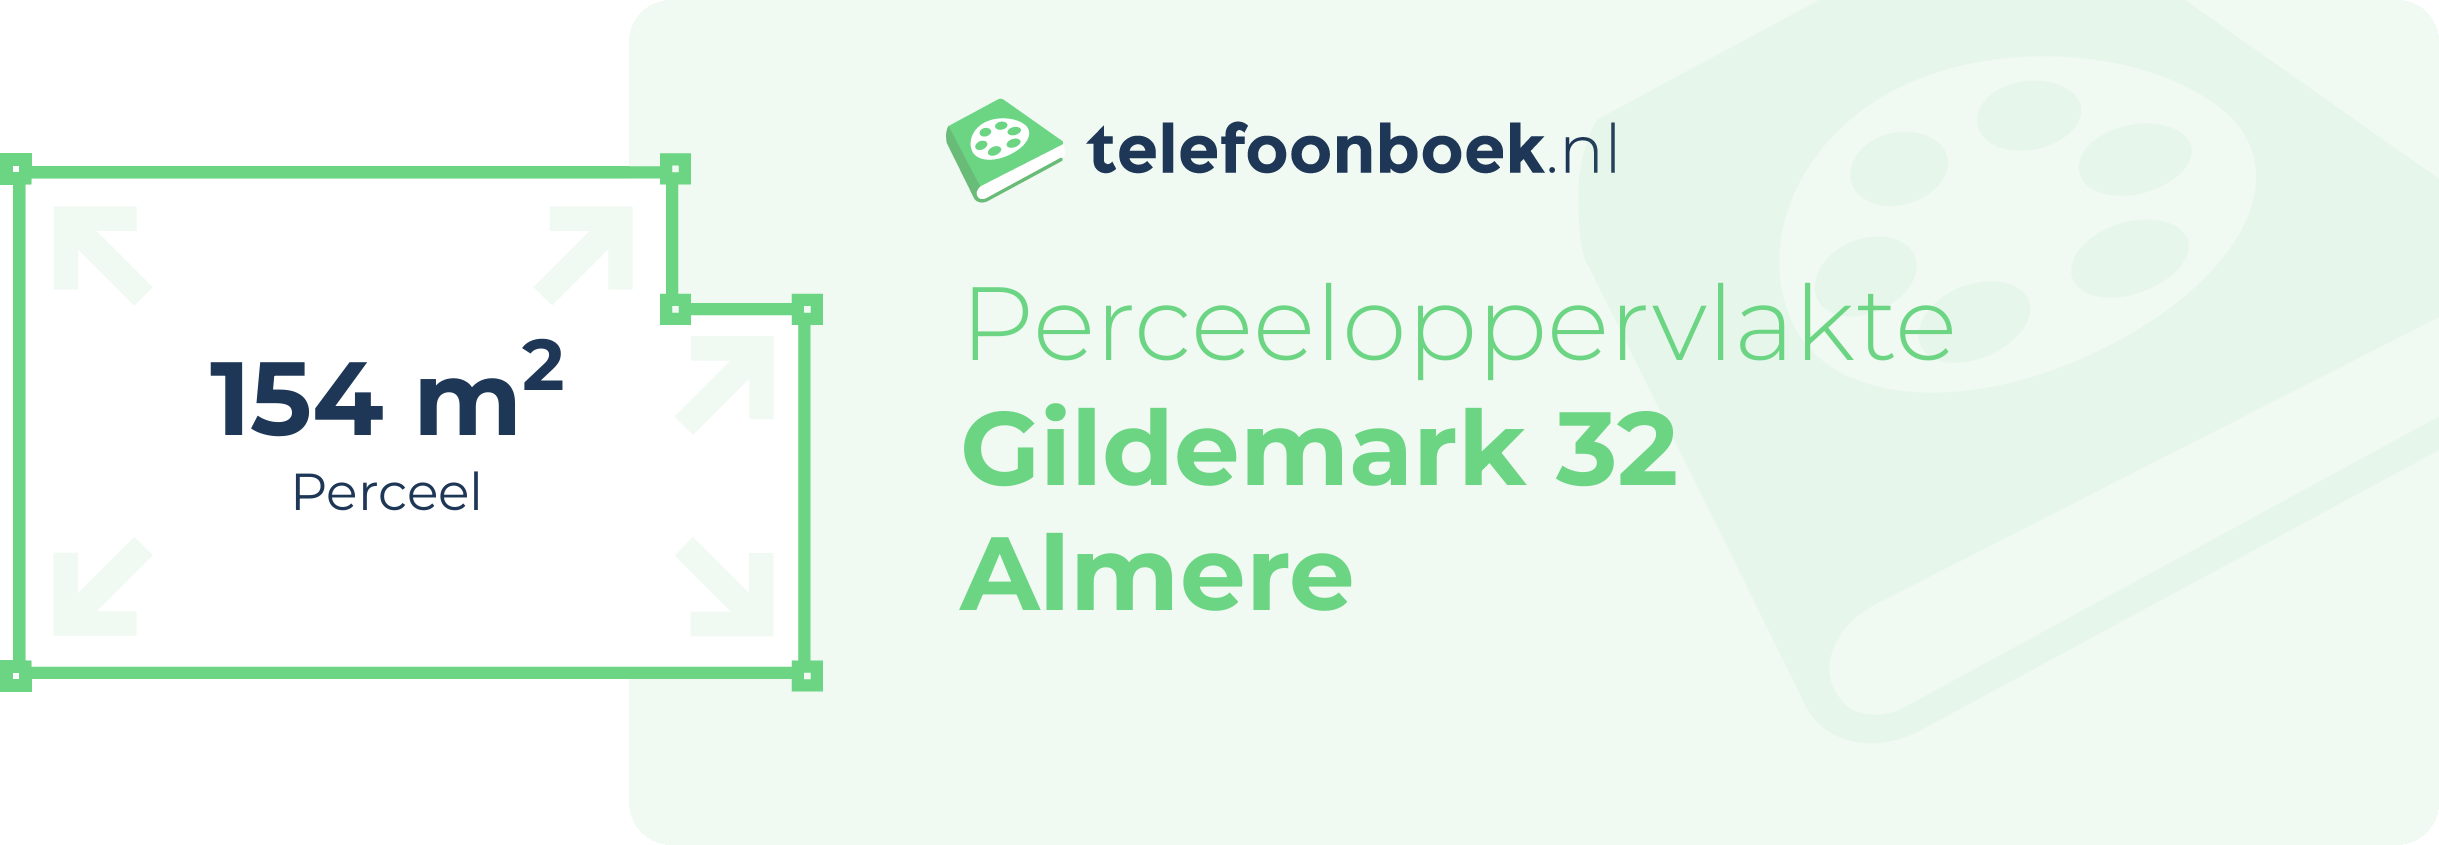 Perceeloppervlakte Gildemark 32 Almere